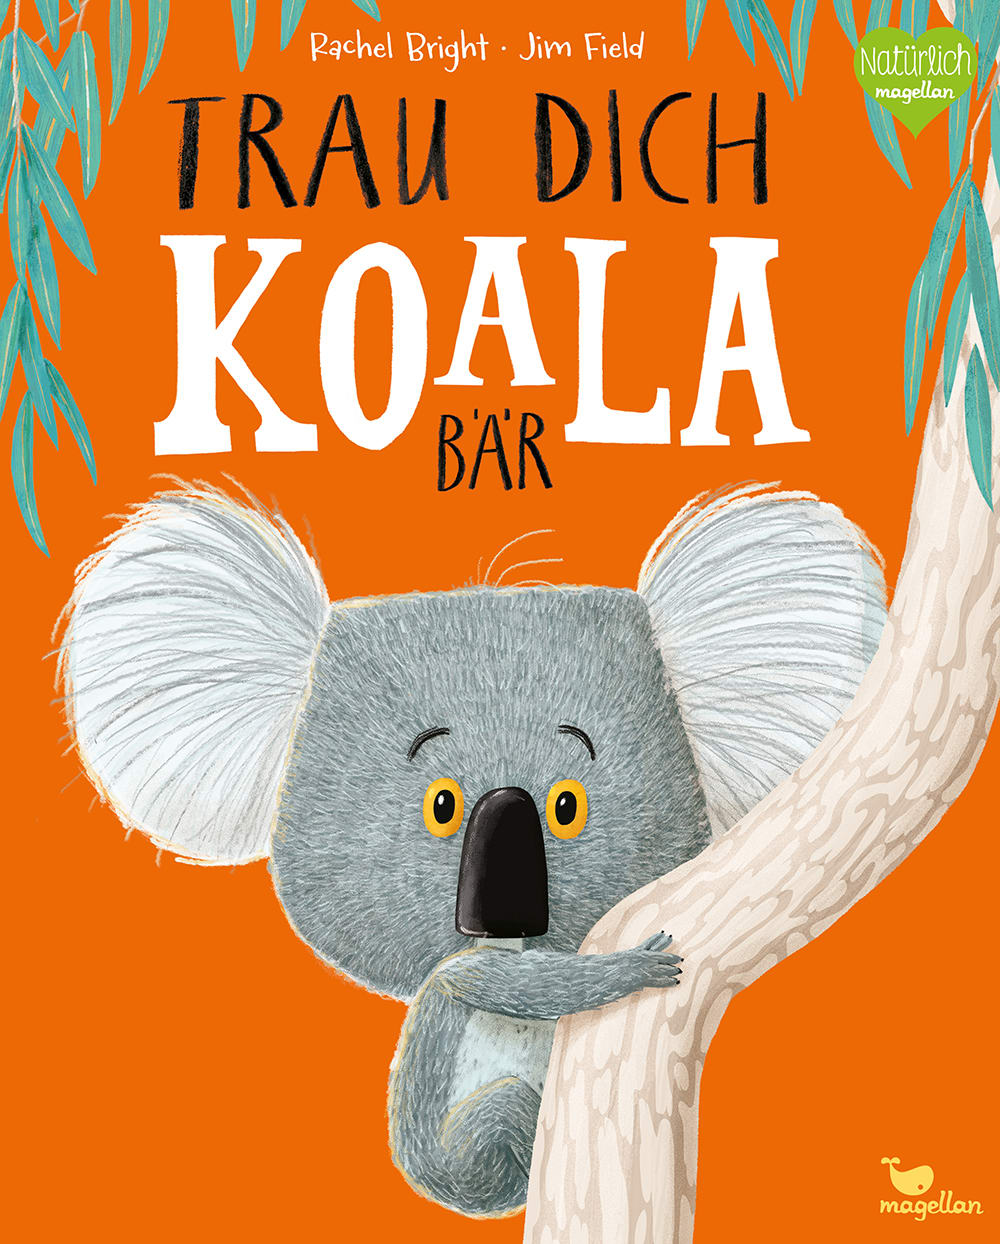 Trau dich  Koalabär - Versandkostenfrei ab 70 Euro - Michel & Ida